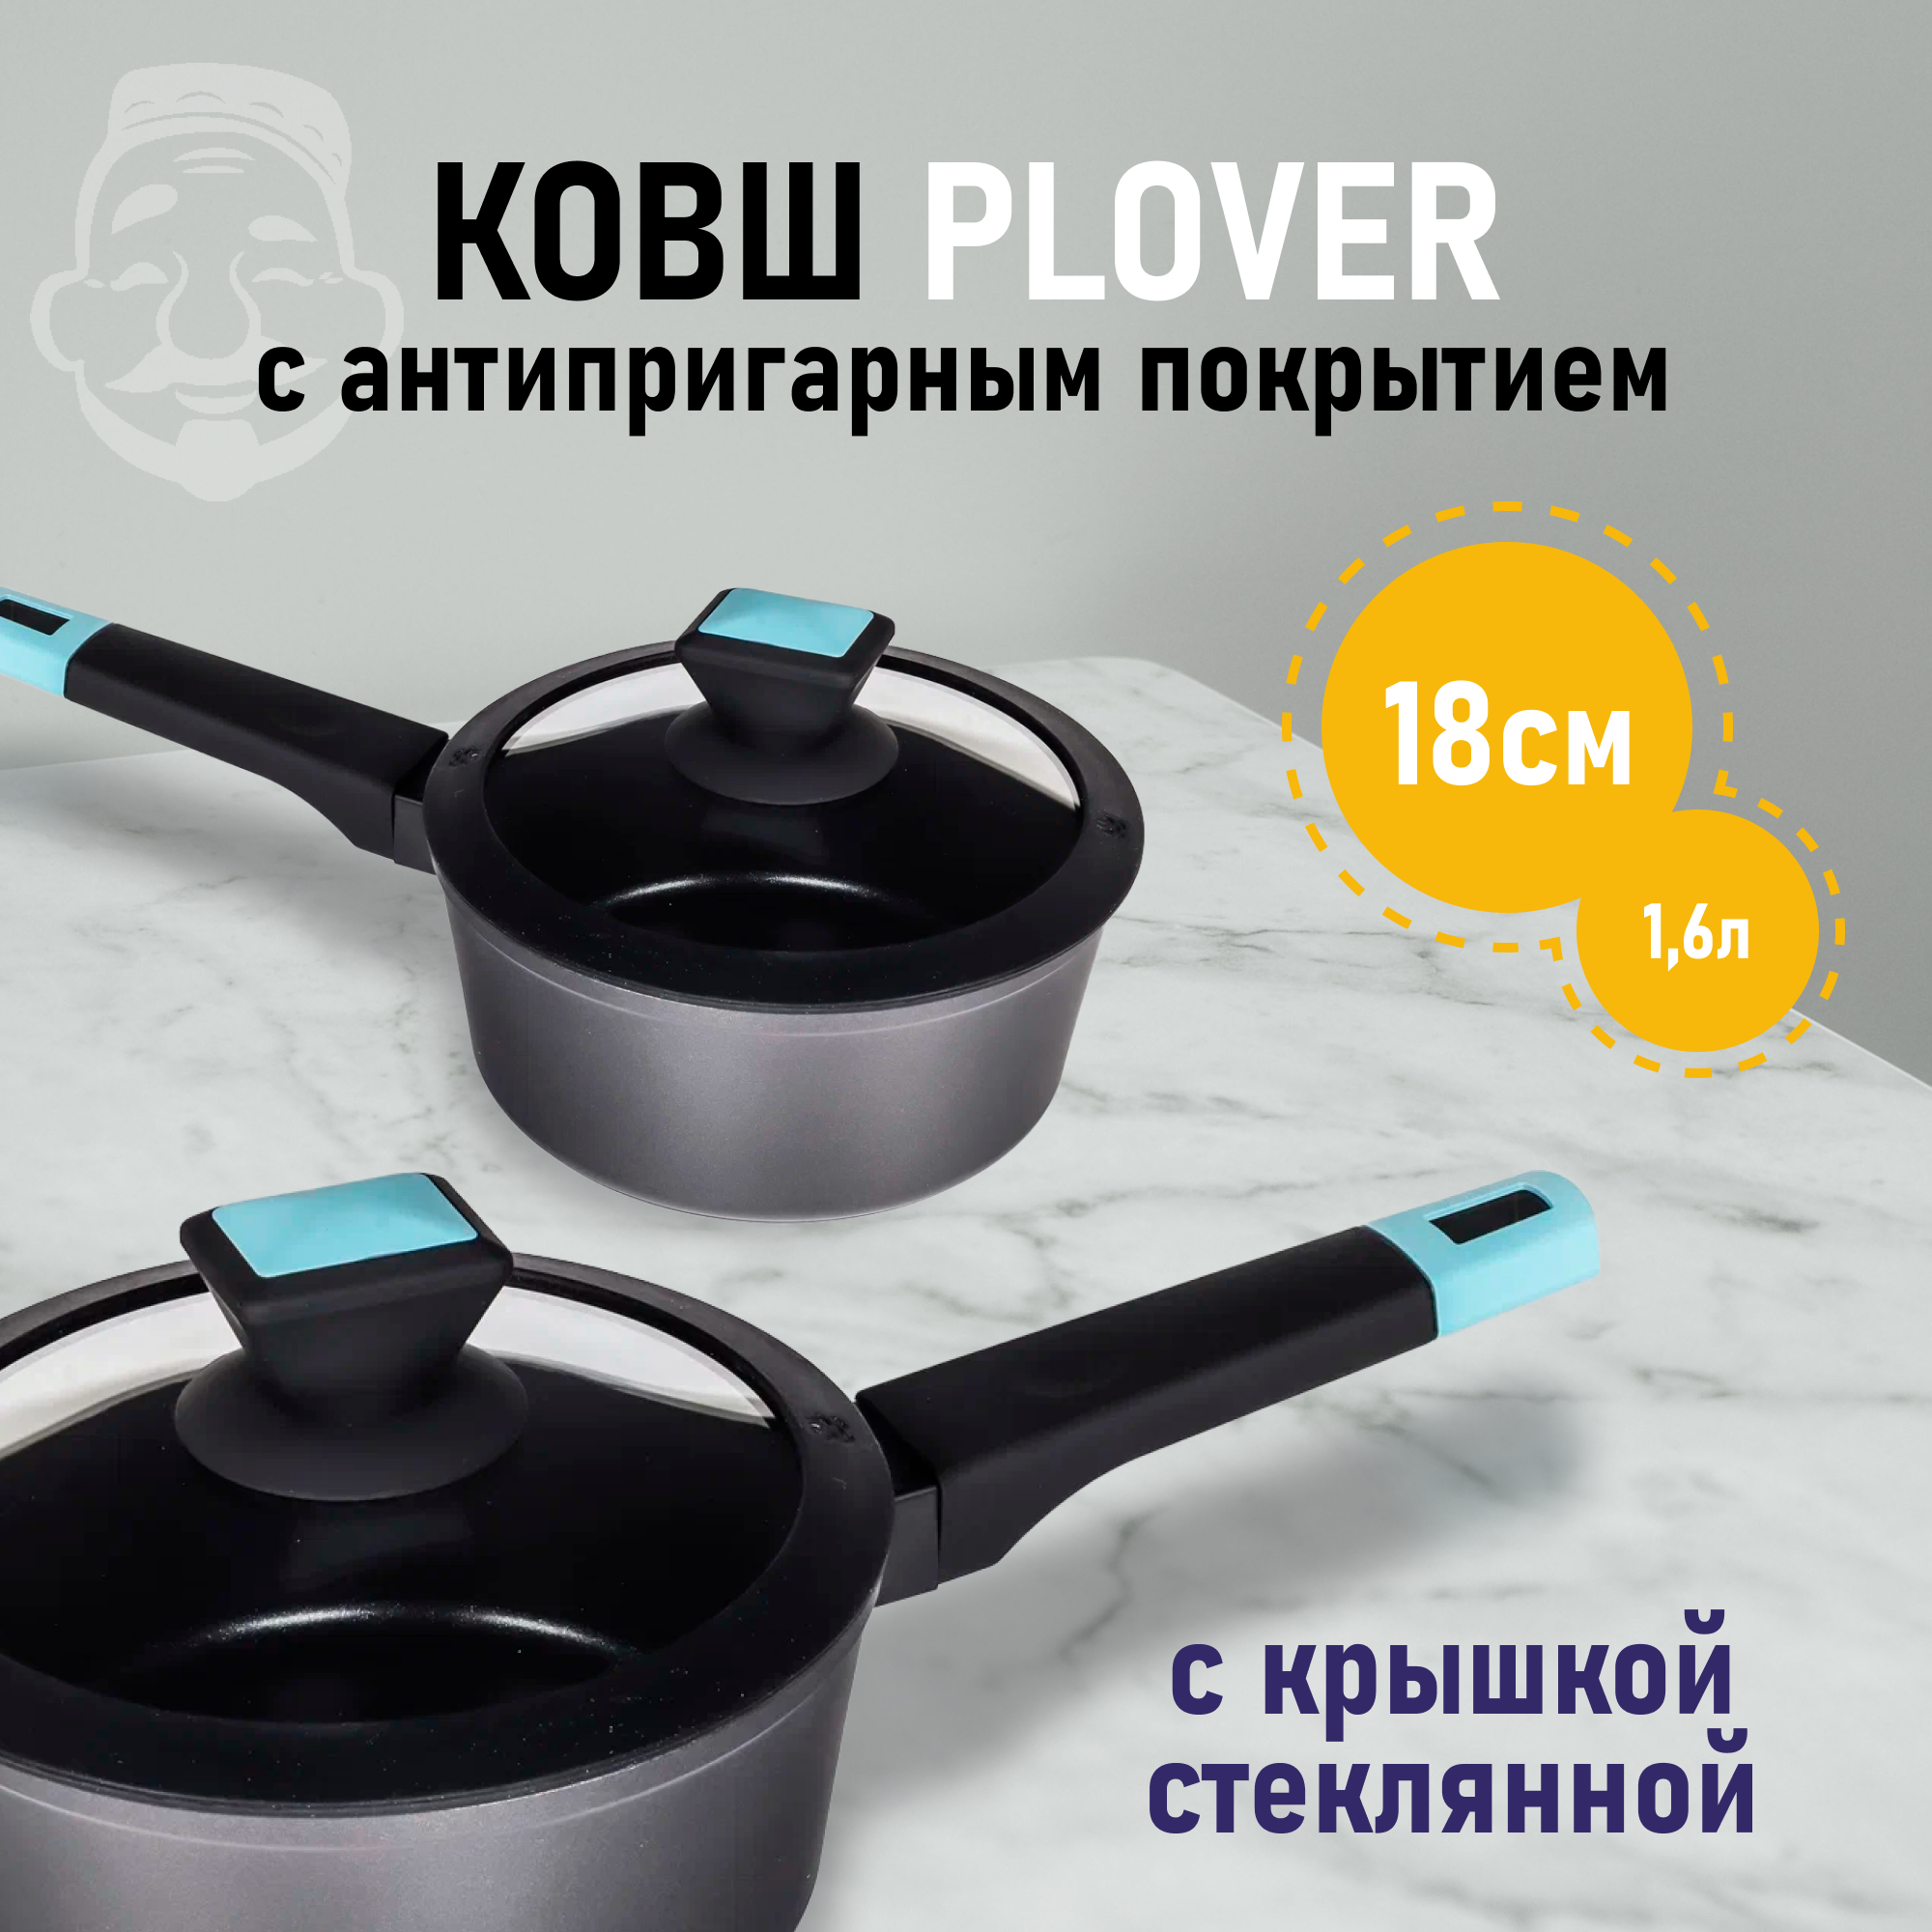 Ковш кухонный для индукционной плиты / Ковш кухонный / Ковш PLOVER